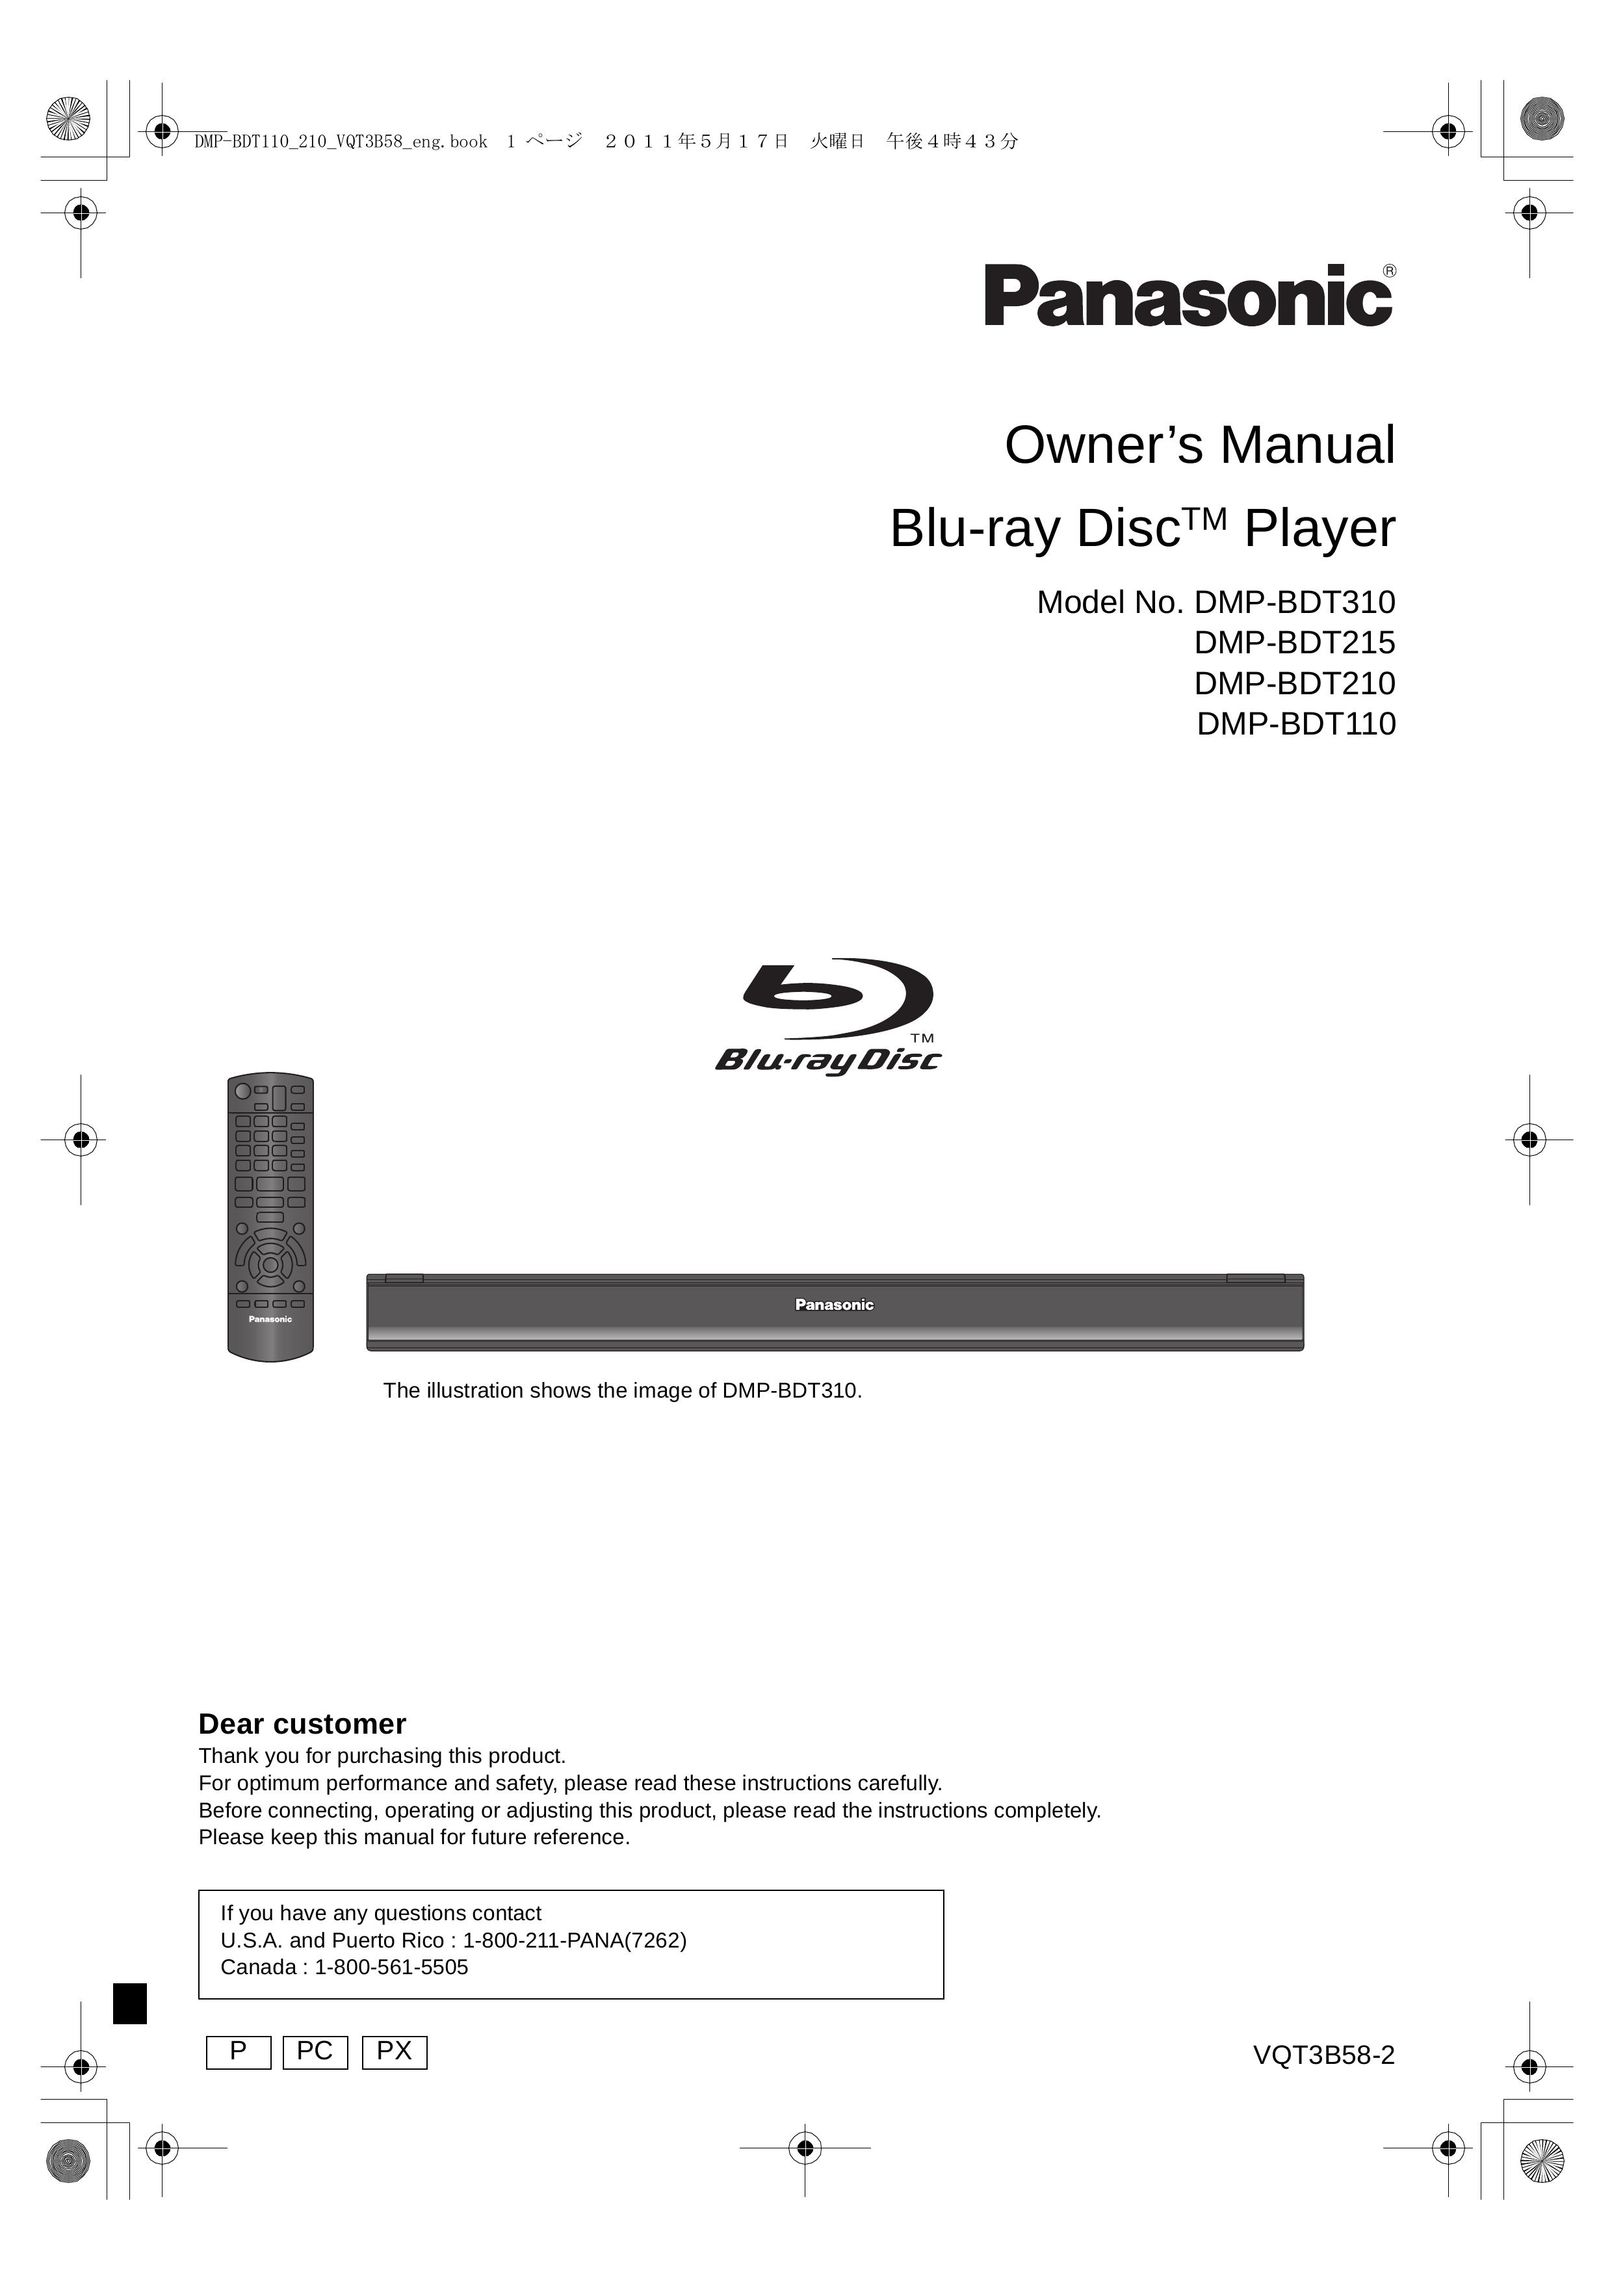 Panasonic DMP-BDT210 DVD Player User Manual